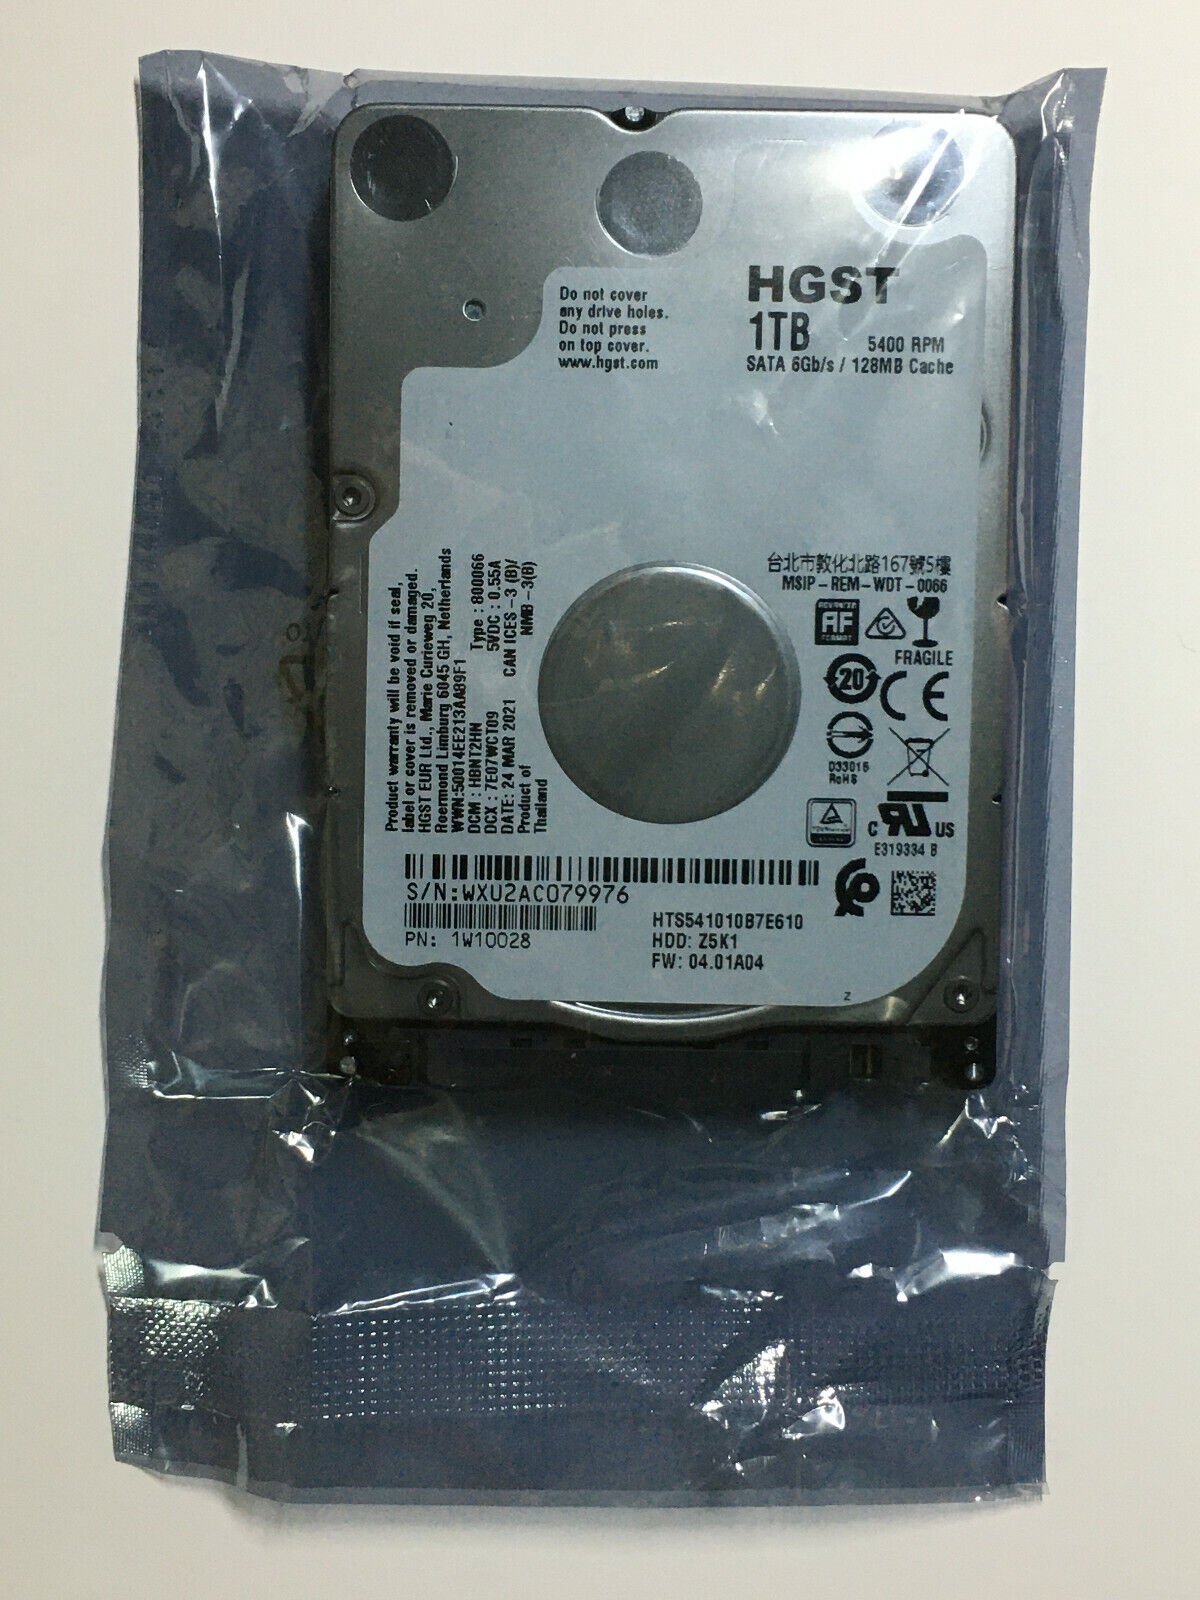 HGST HTS541010B7E610 1TB 5400 RPM SATA 6Gbps 128MB Cache Laptop Hard Disk Drive